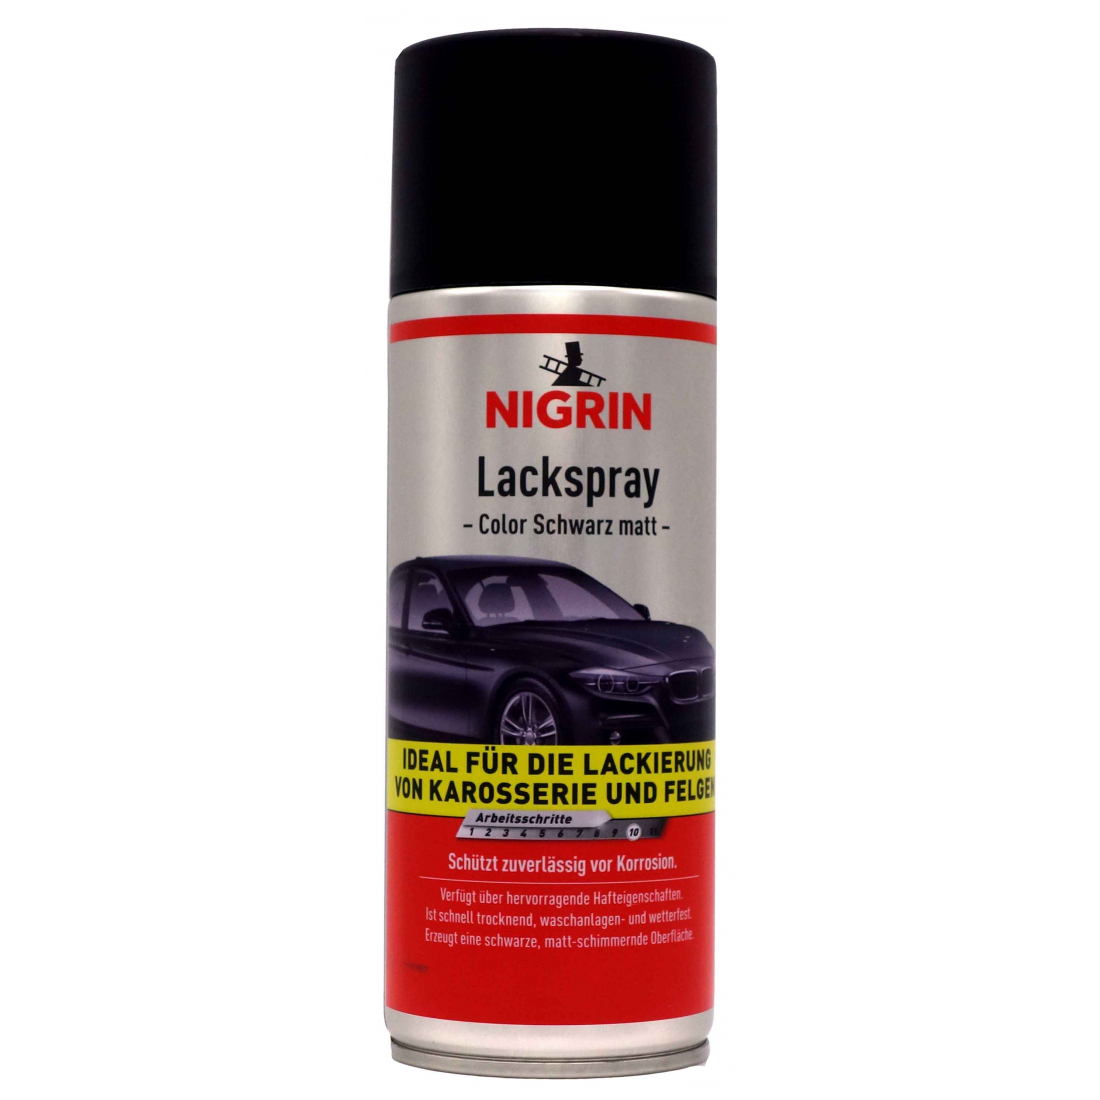 Nigrin Lackspray schwarz matt 400 ml 74112